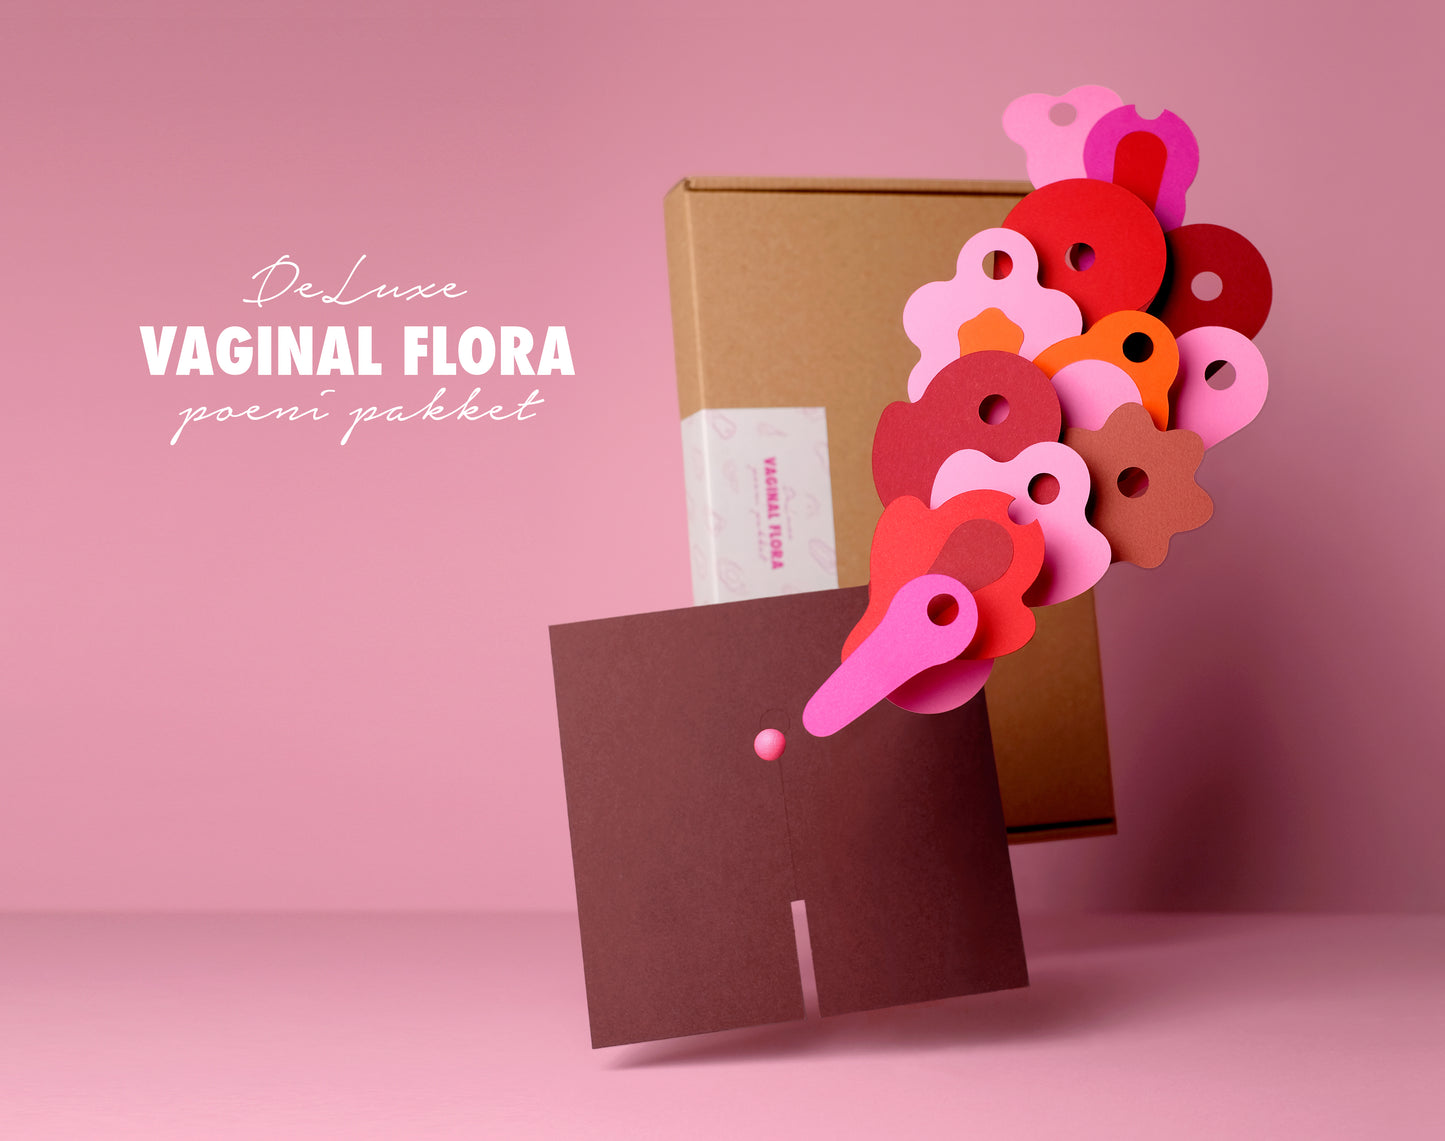 DeLuxe Vaginal Flora poeni pakket - paper vulva DIY kit